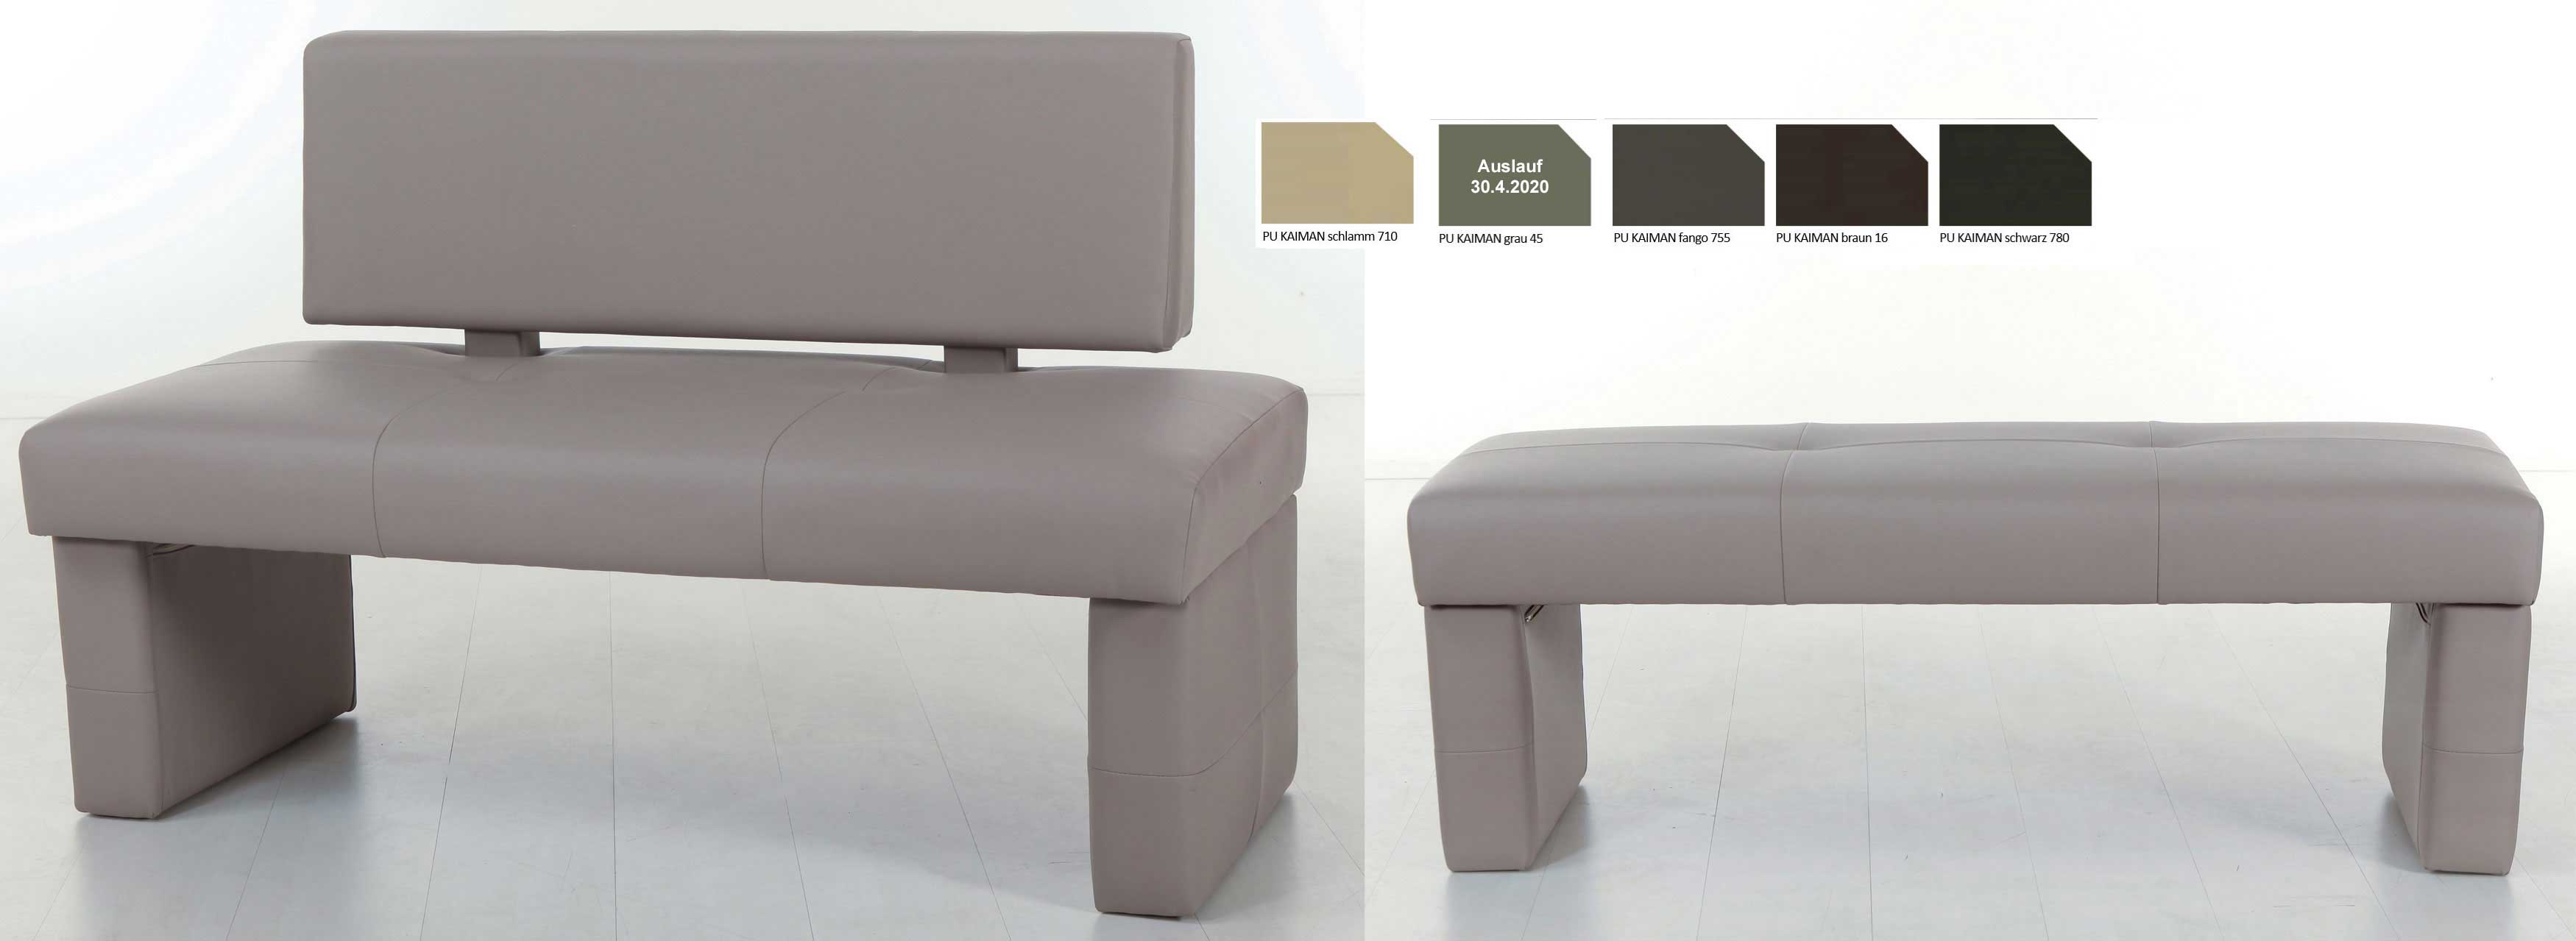 Standard Furniture Domino Polsterbank Kunstleder